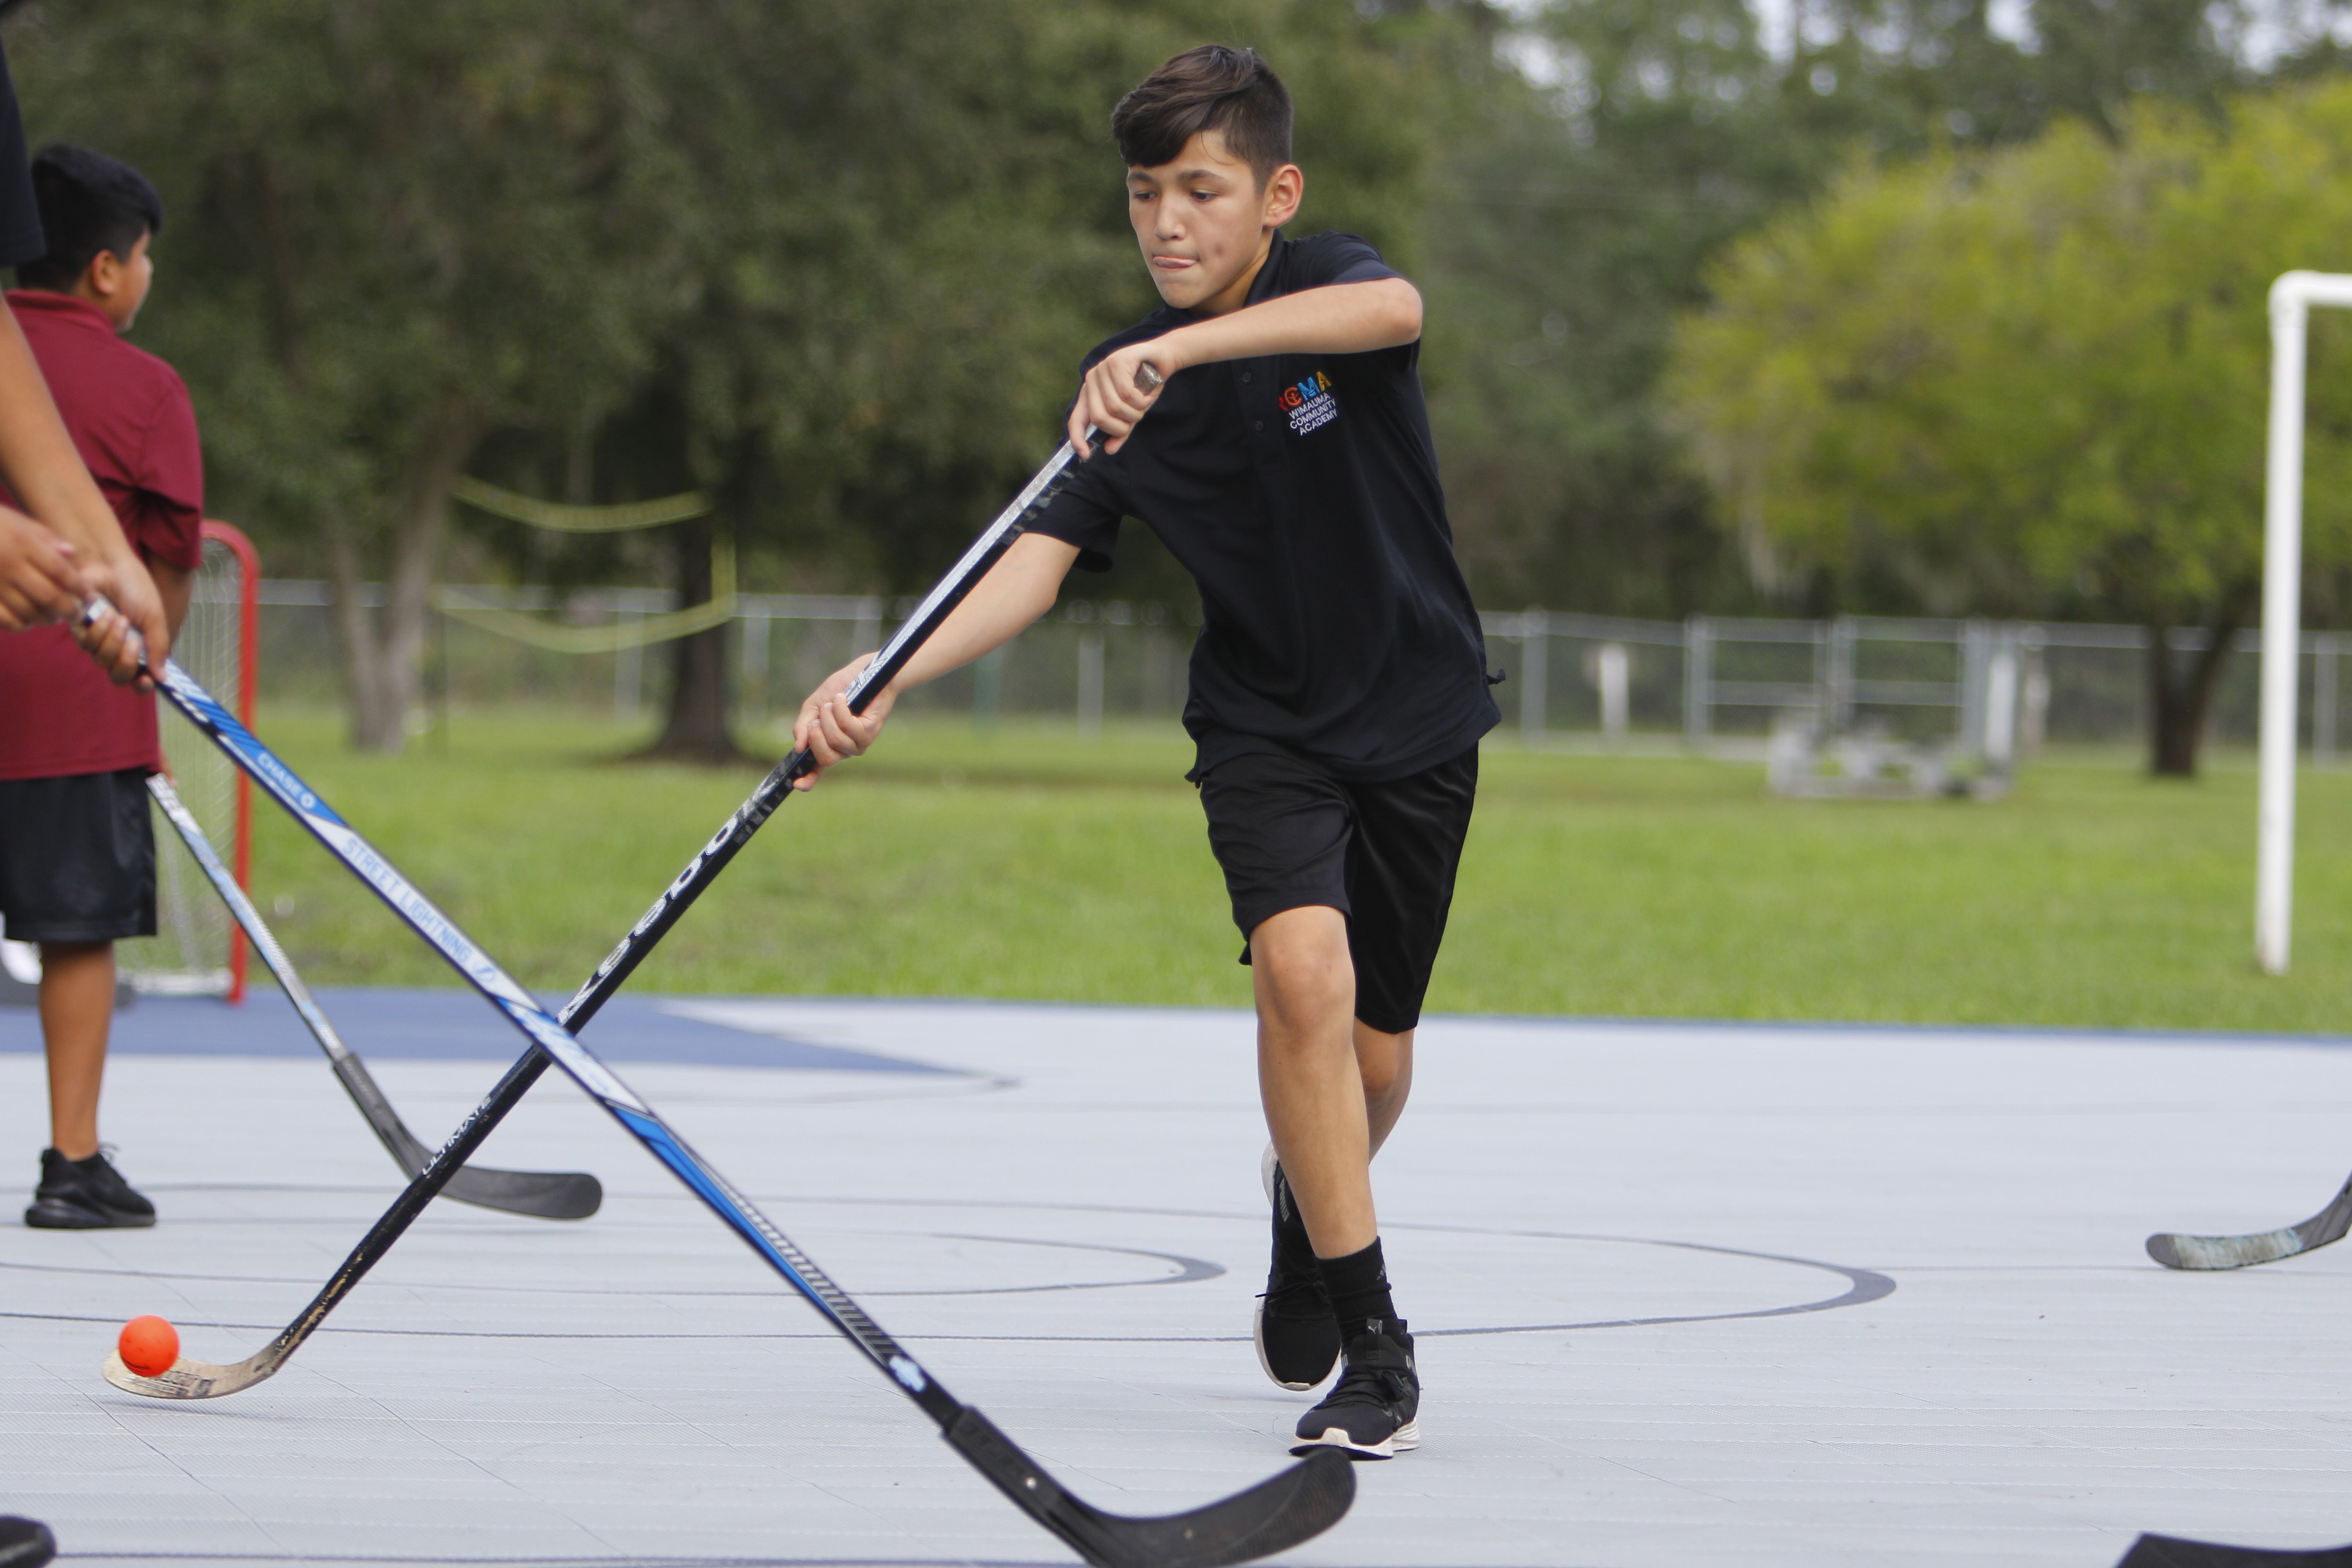 Lightning help hockey meet STEM in the classroom